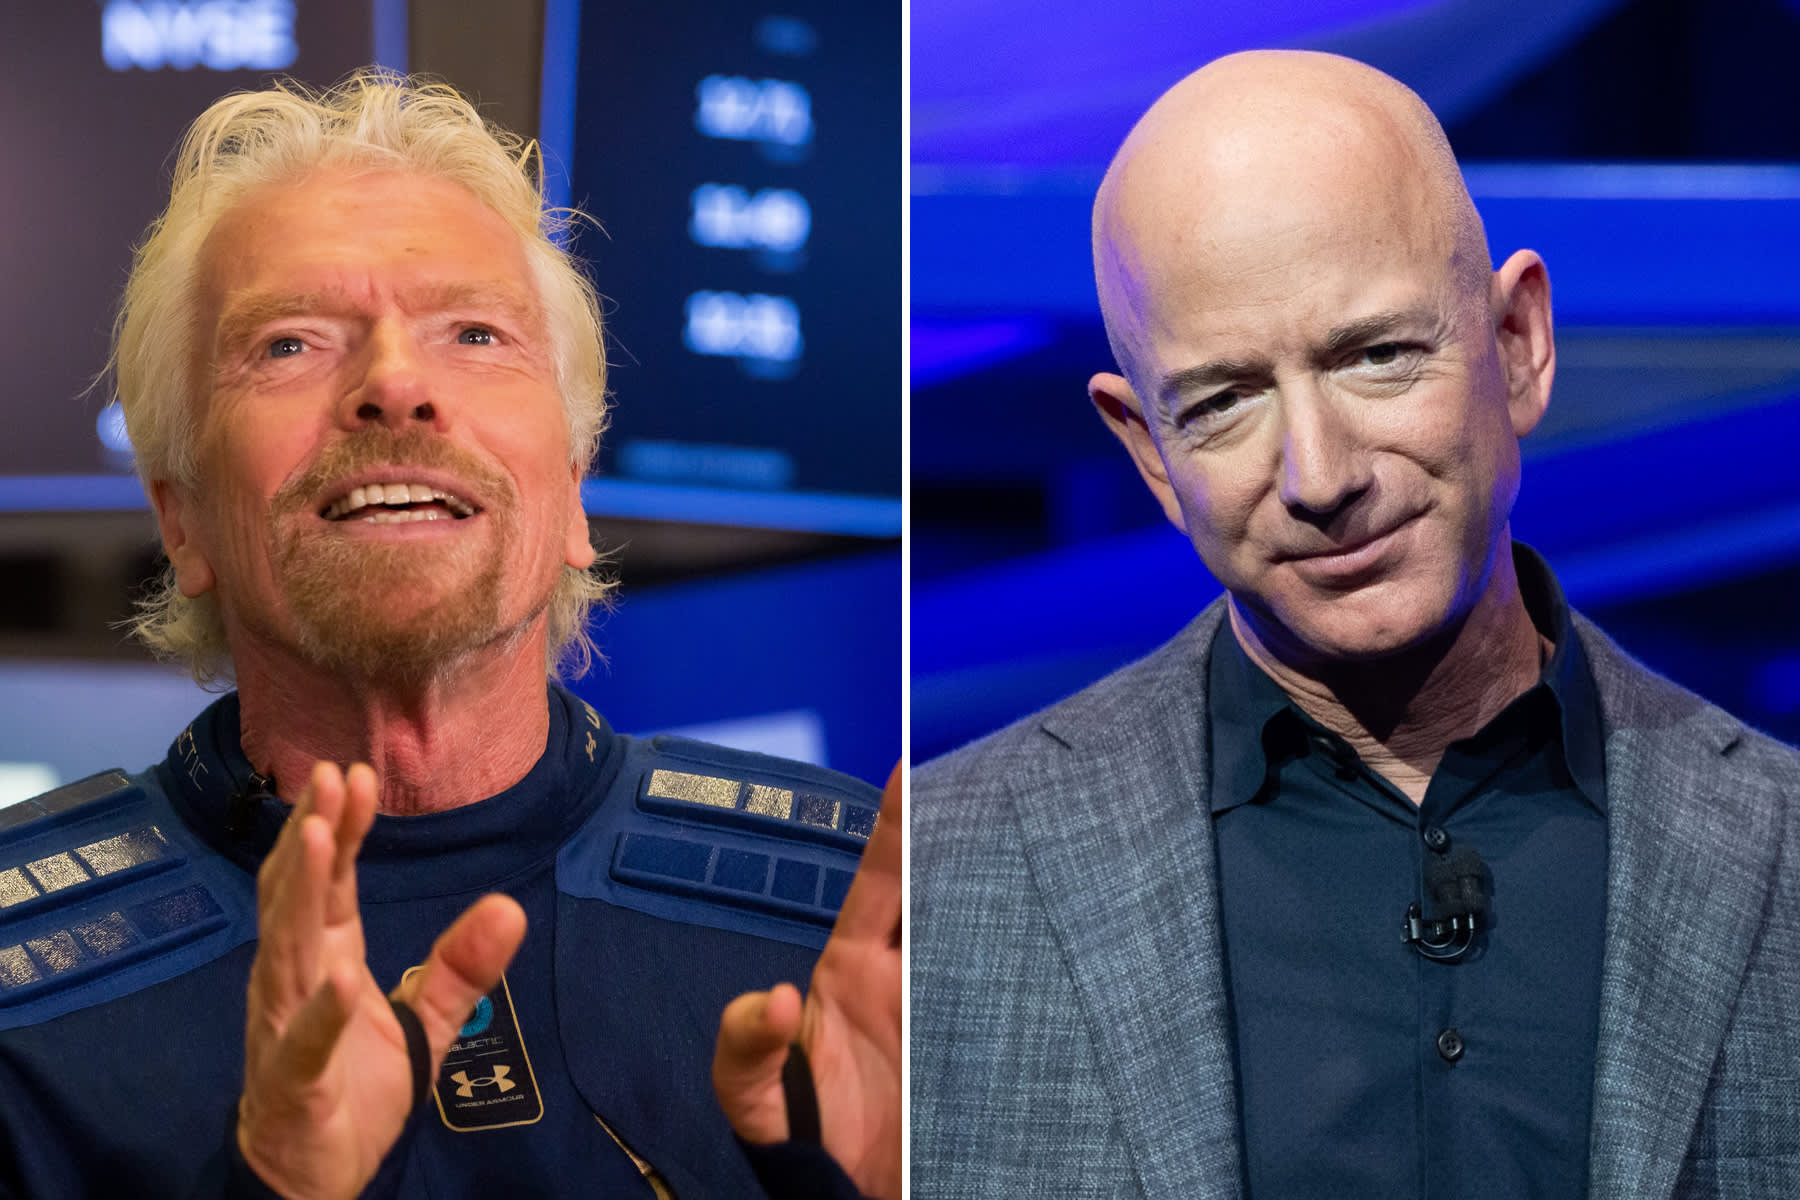 Bezos’ Blue Origin vs. Branson’s Virgin Galactic